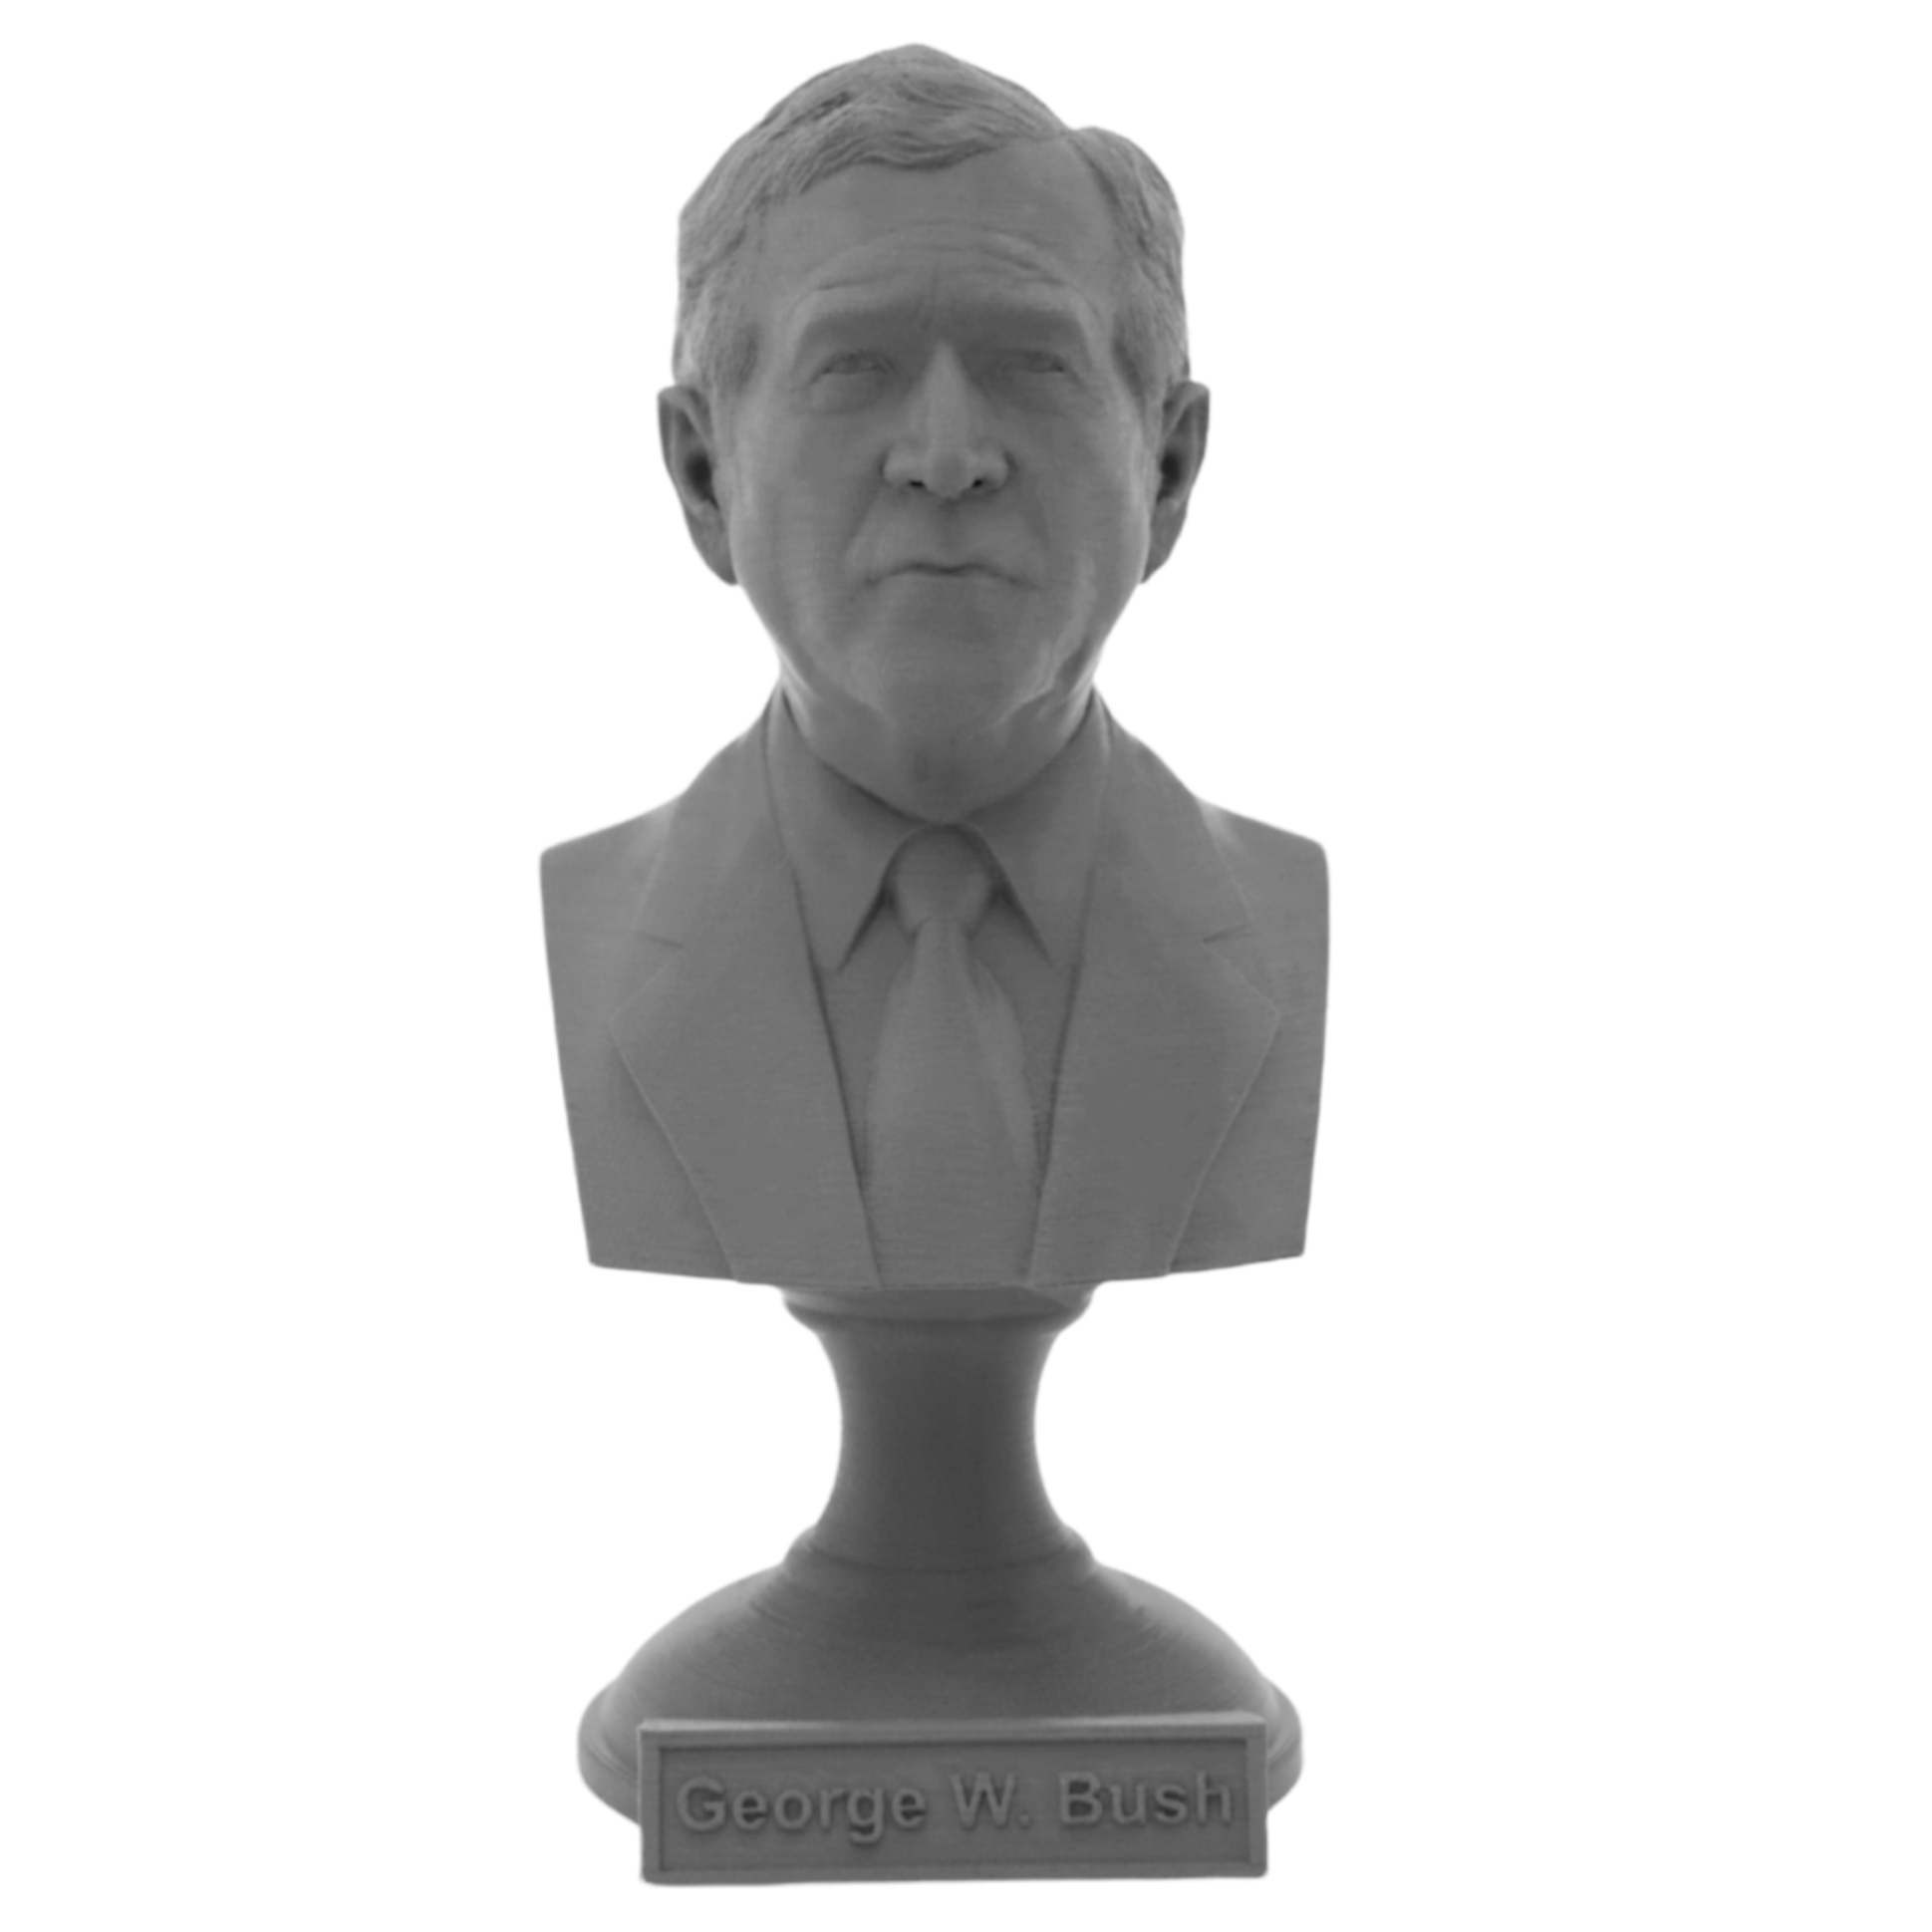 George W. Bush, 43rd US President, Sculpture Bust on Pedestal